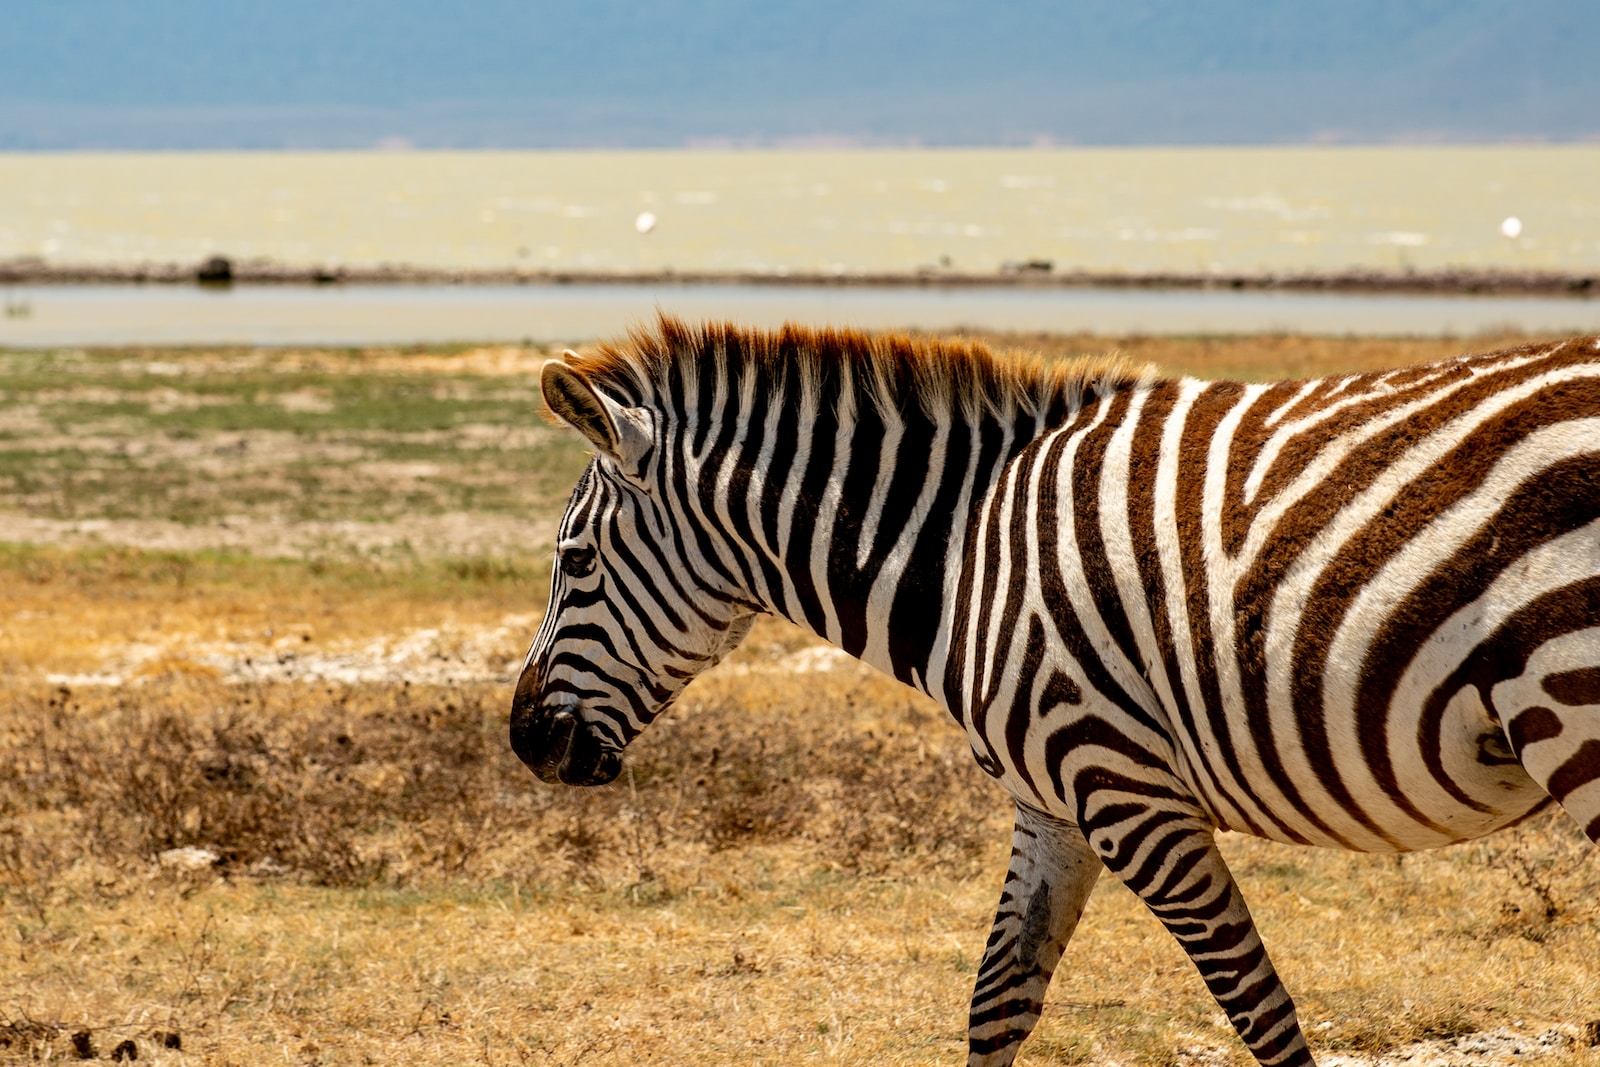 a zebra walking across a dry grass covered field